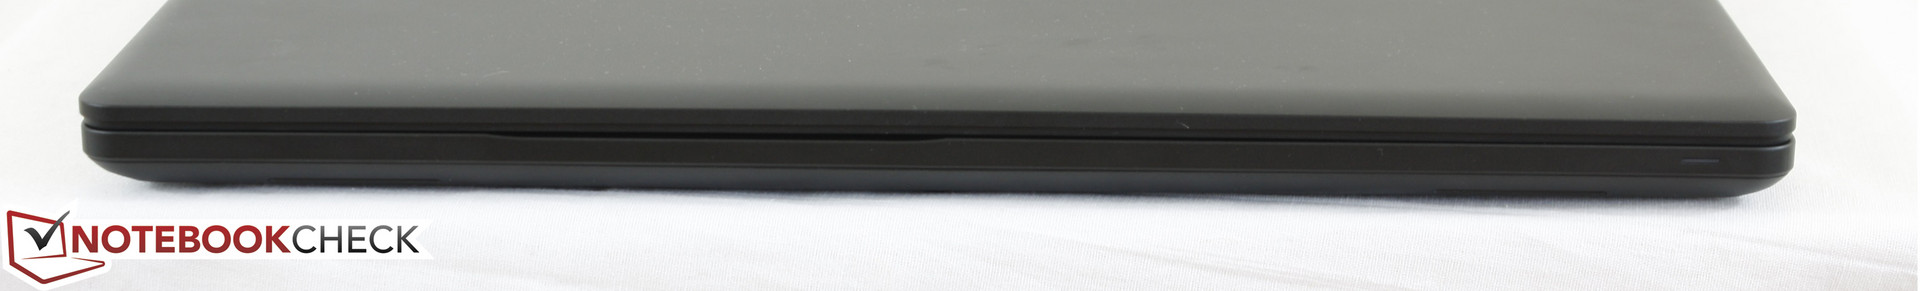 Dell Latitude 5580 (i5-7200U, HD) Laptop Review - NotebookCheck.net Reviews